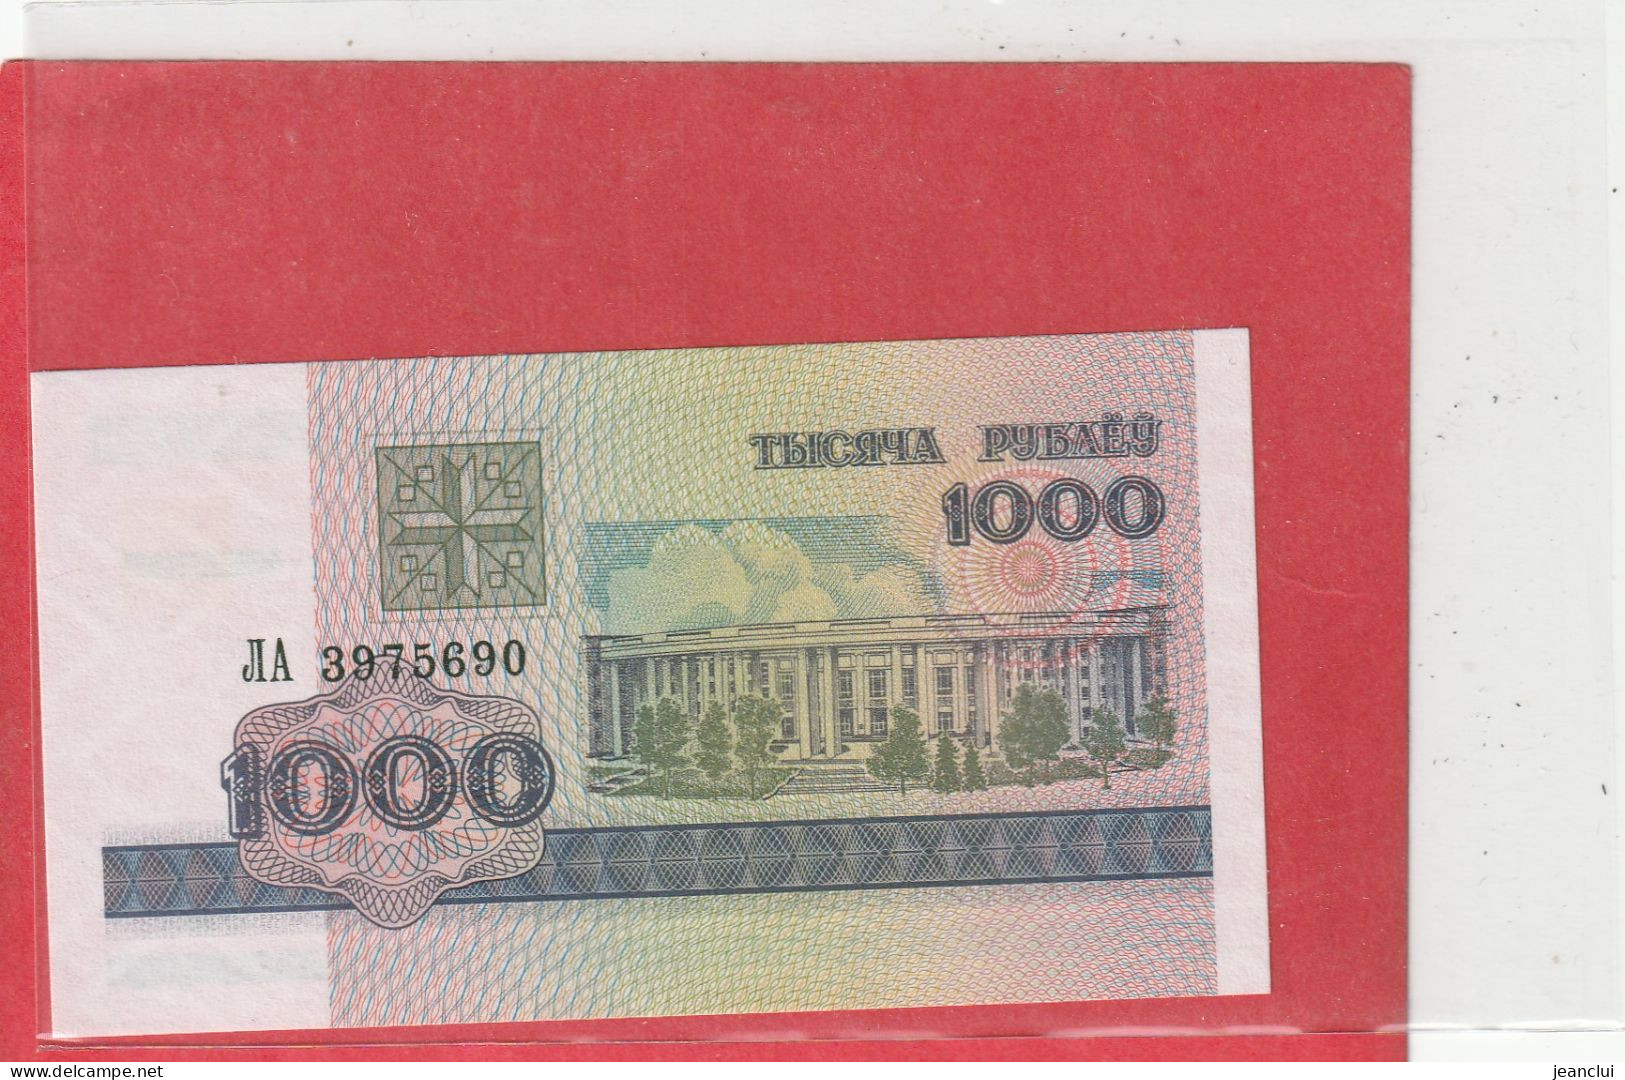 BELARUS NATIONAL BANK  .  1.000 RUBLEI   . N° 3975690 .  1998     2 SCANNES  .  BILLET ETAT LUXE - Belarus